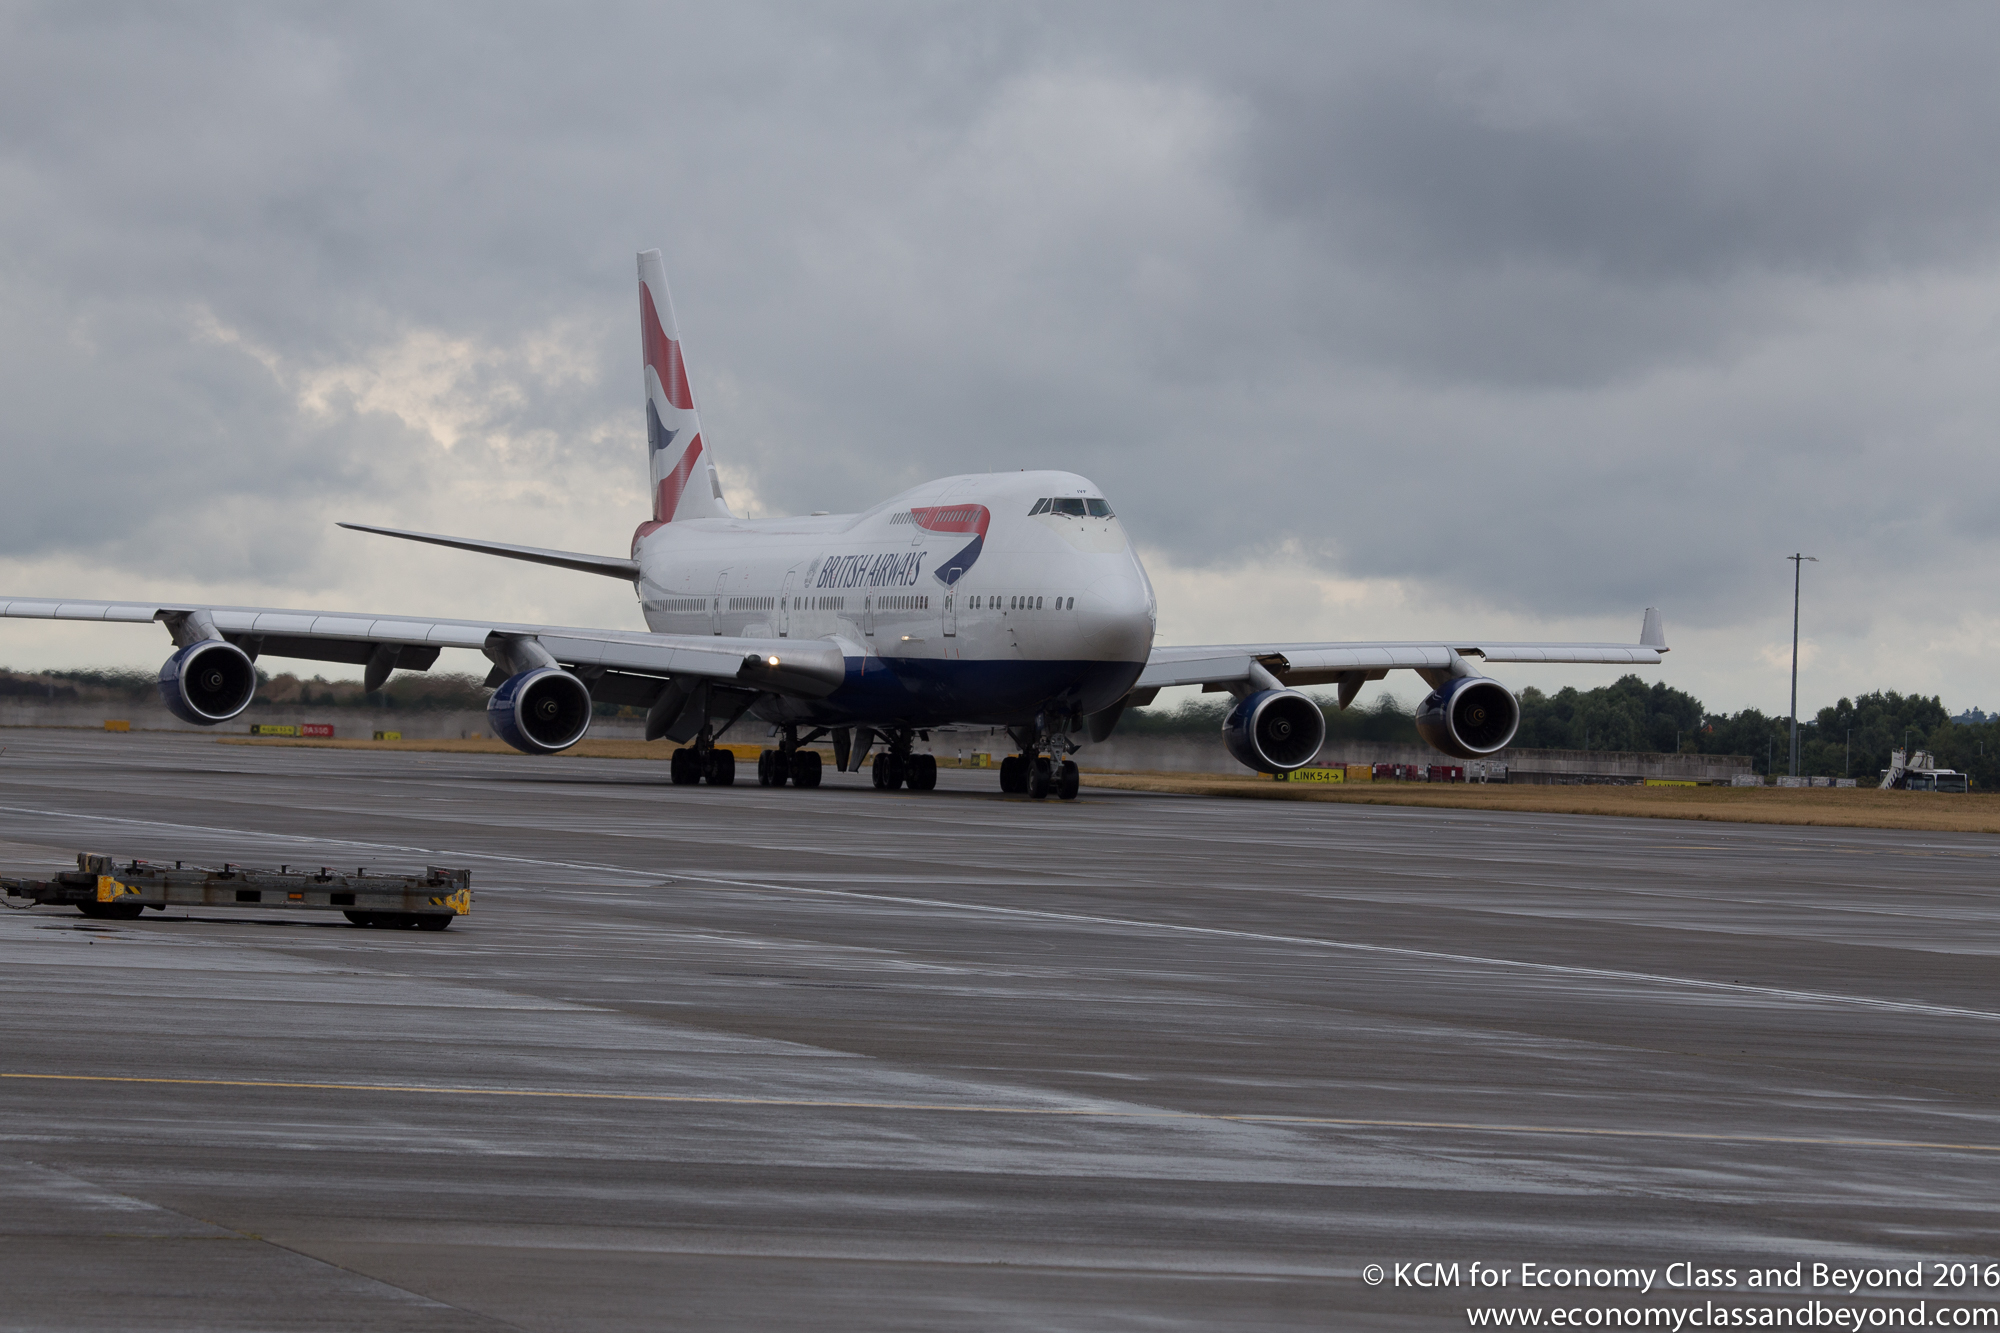 It's that time again - British Airways sale in progress